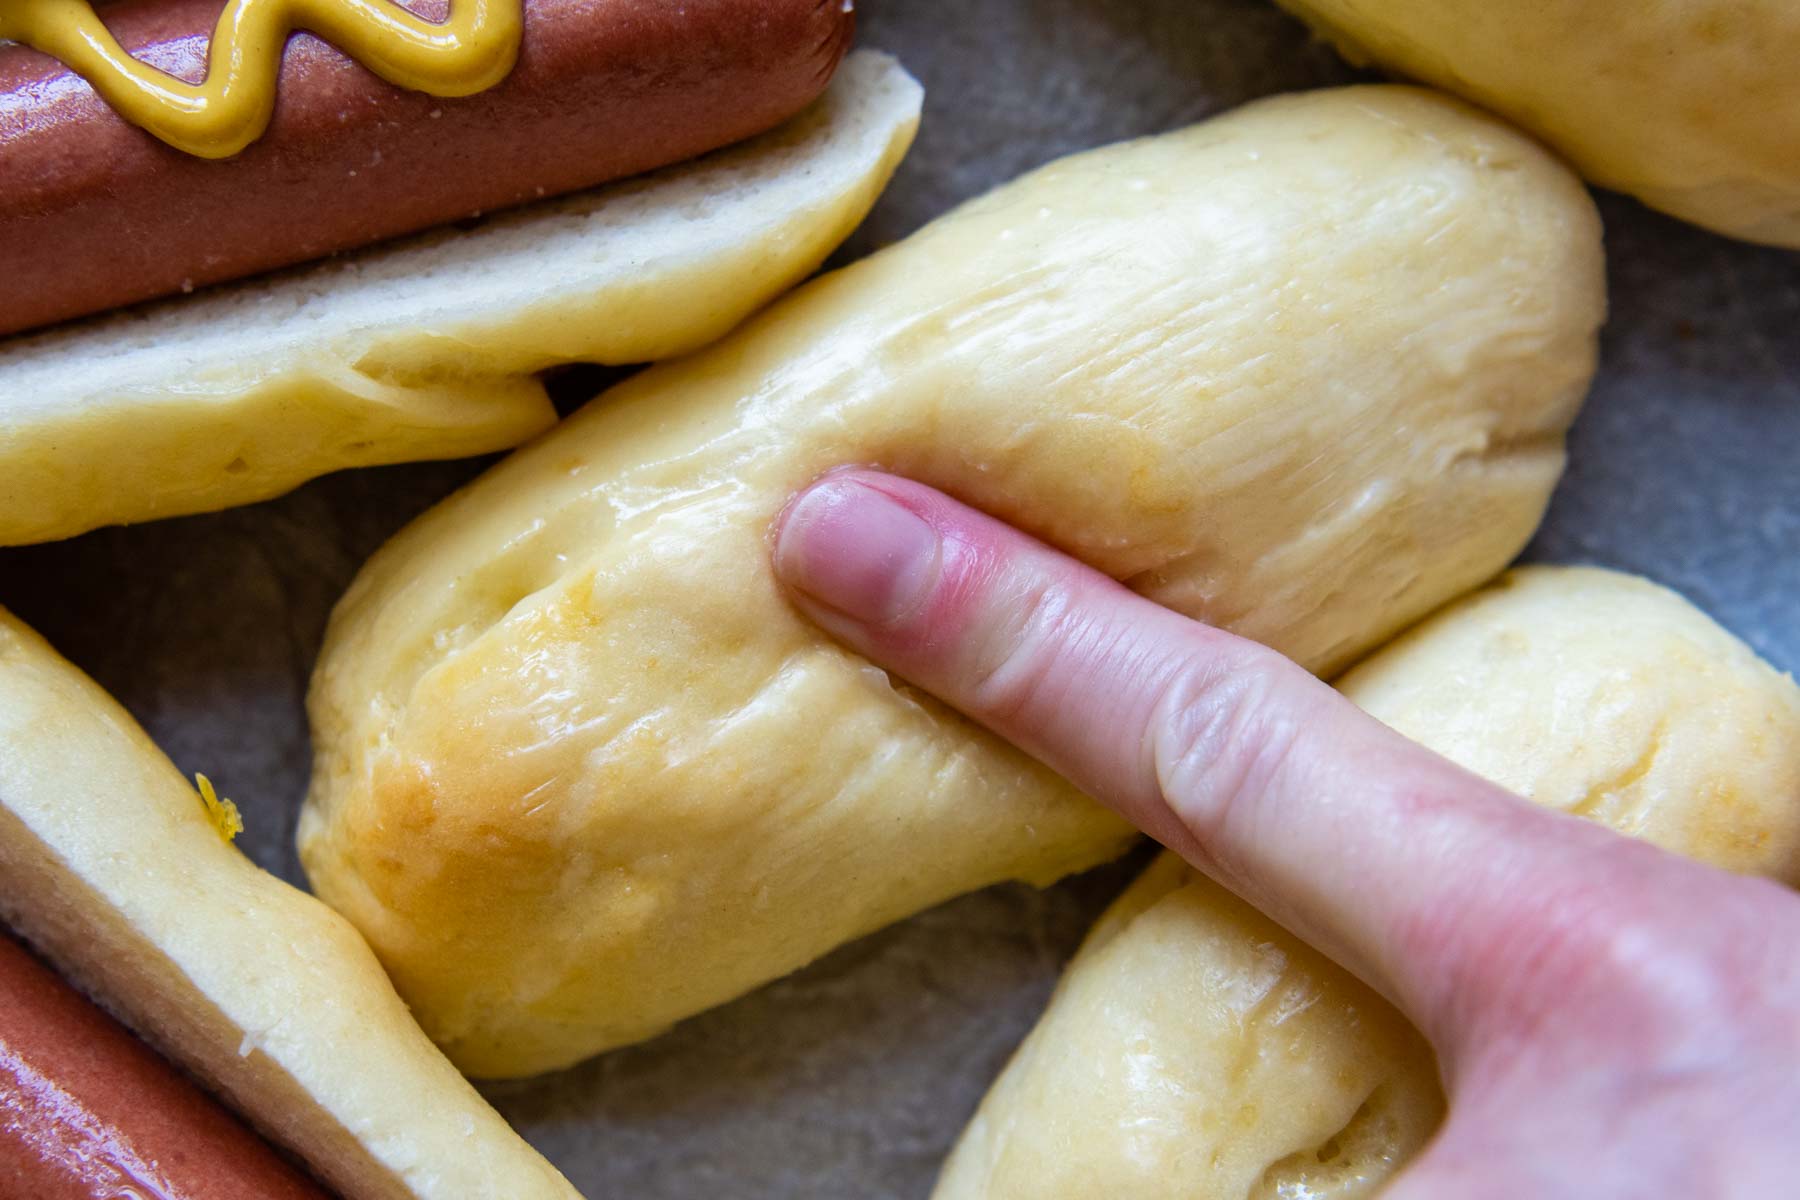 a finger pressing down on a hot dog bun.